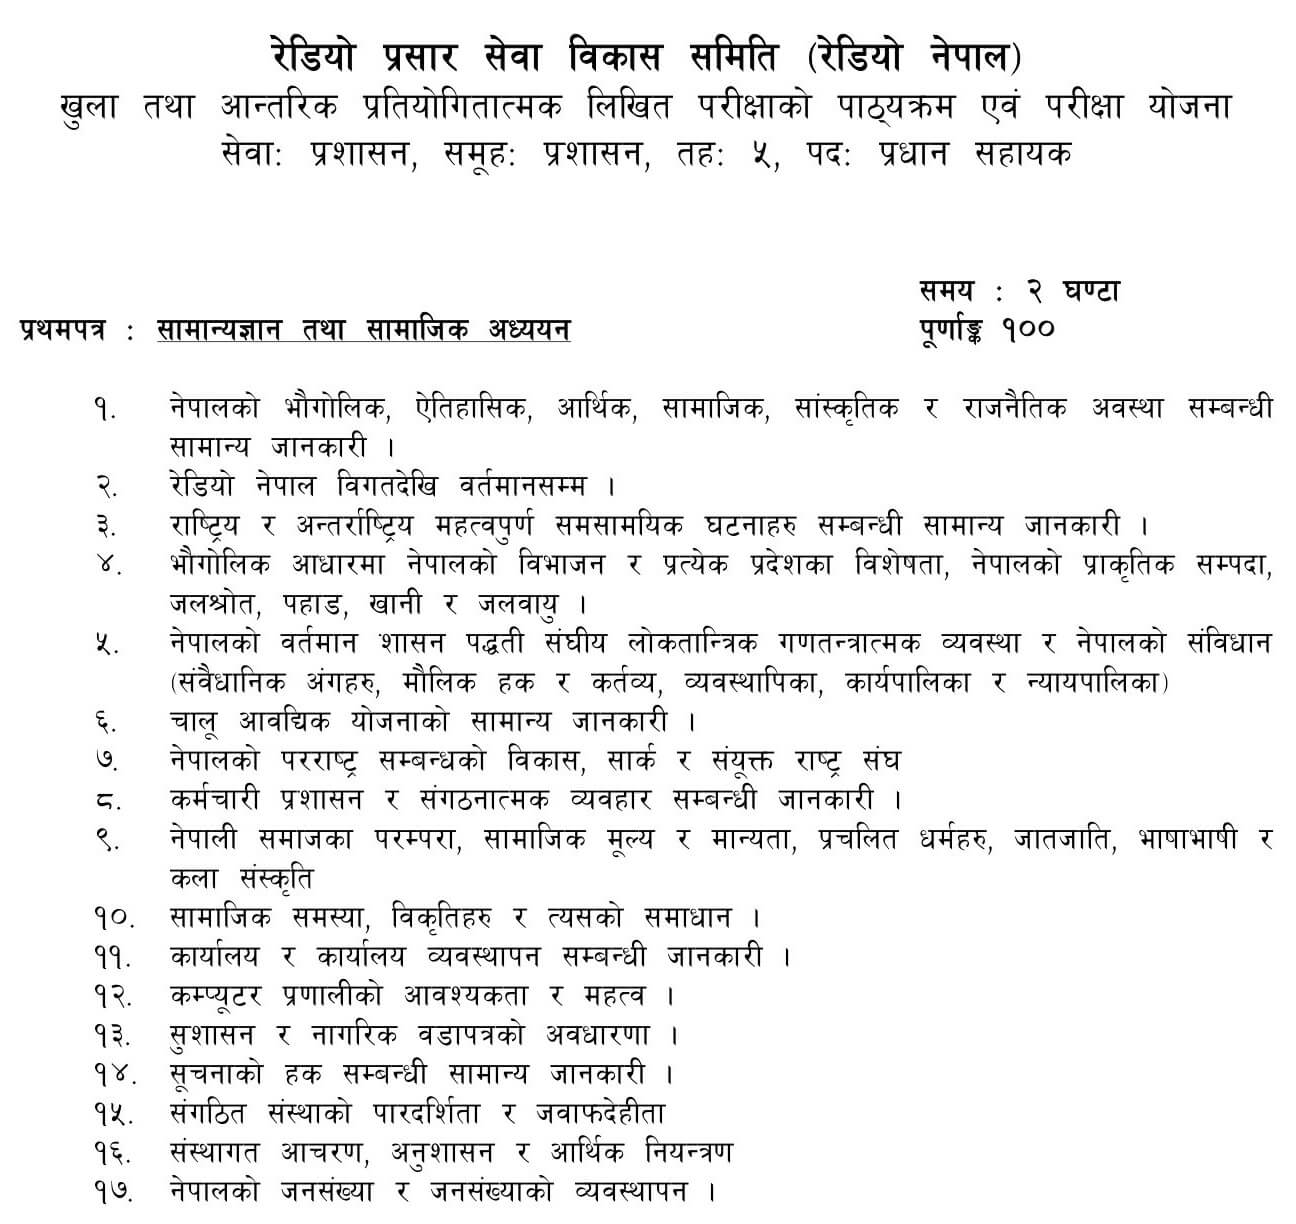 Radio Nepal Syllabus Department: Admin Rank: Level 5 Senior Assistant. Radio Nepal Level 5 Syllabus - Senior Assistant